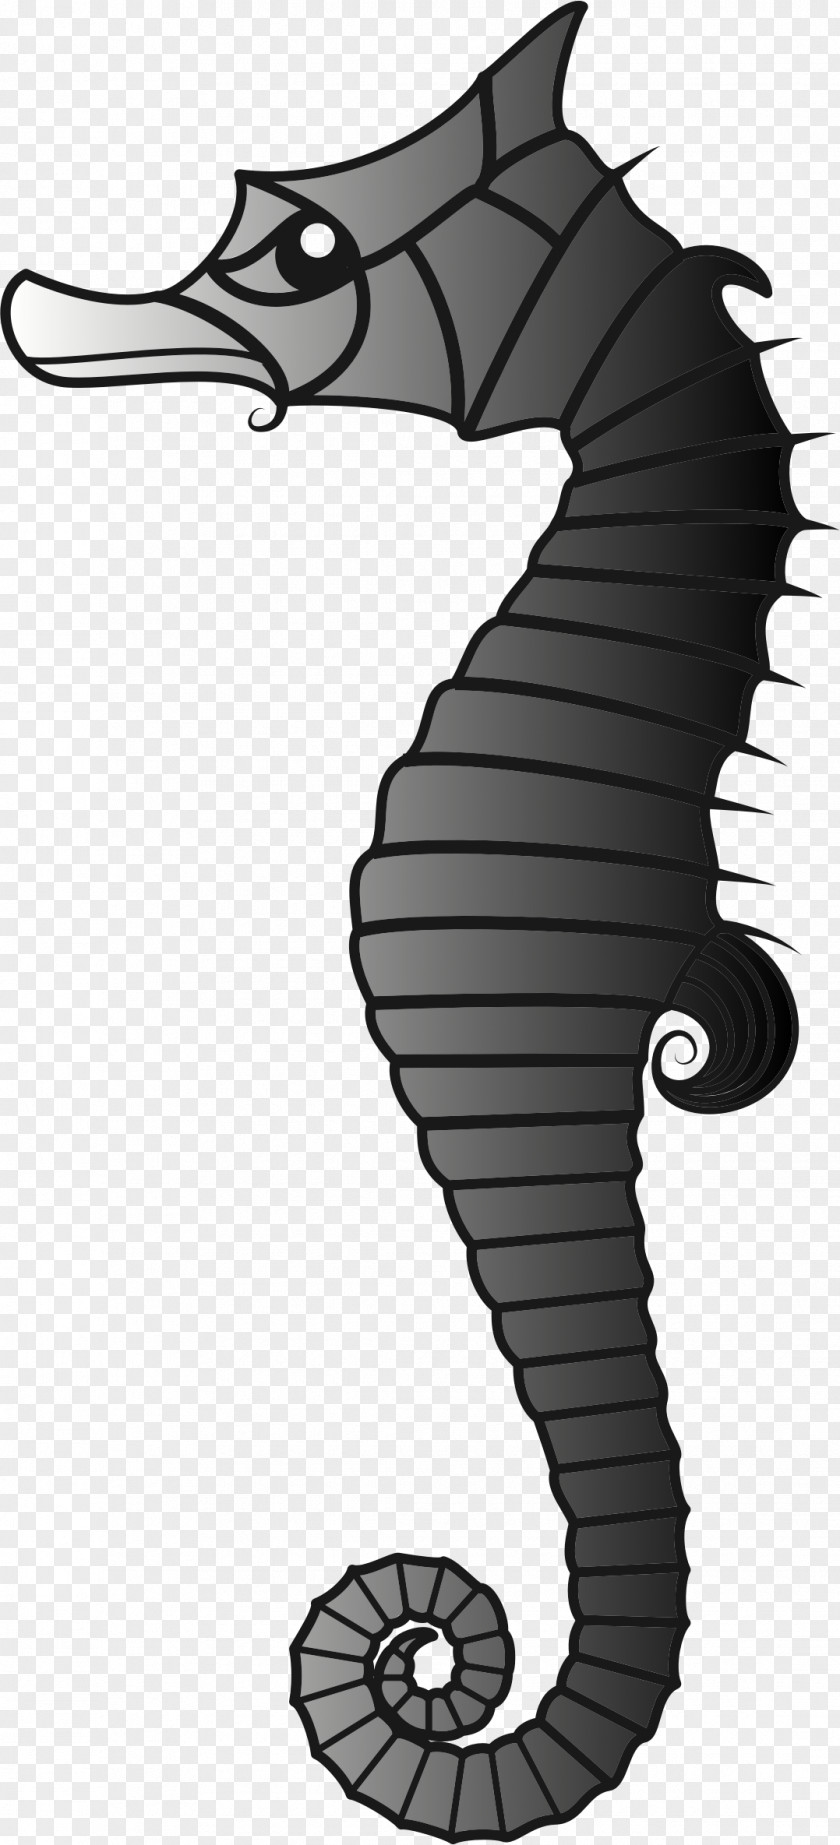 Seahorse Character Clip Art PNG